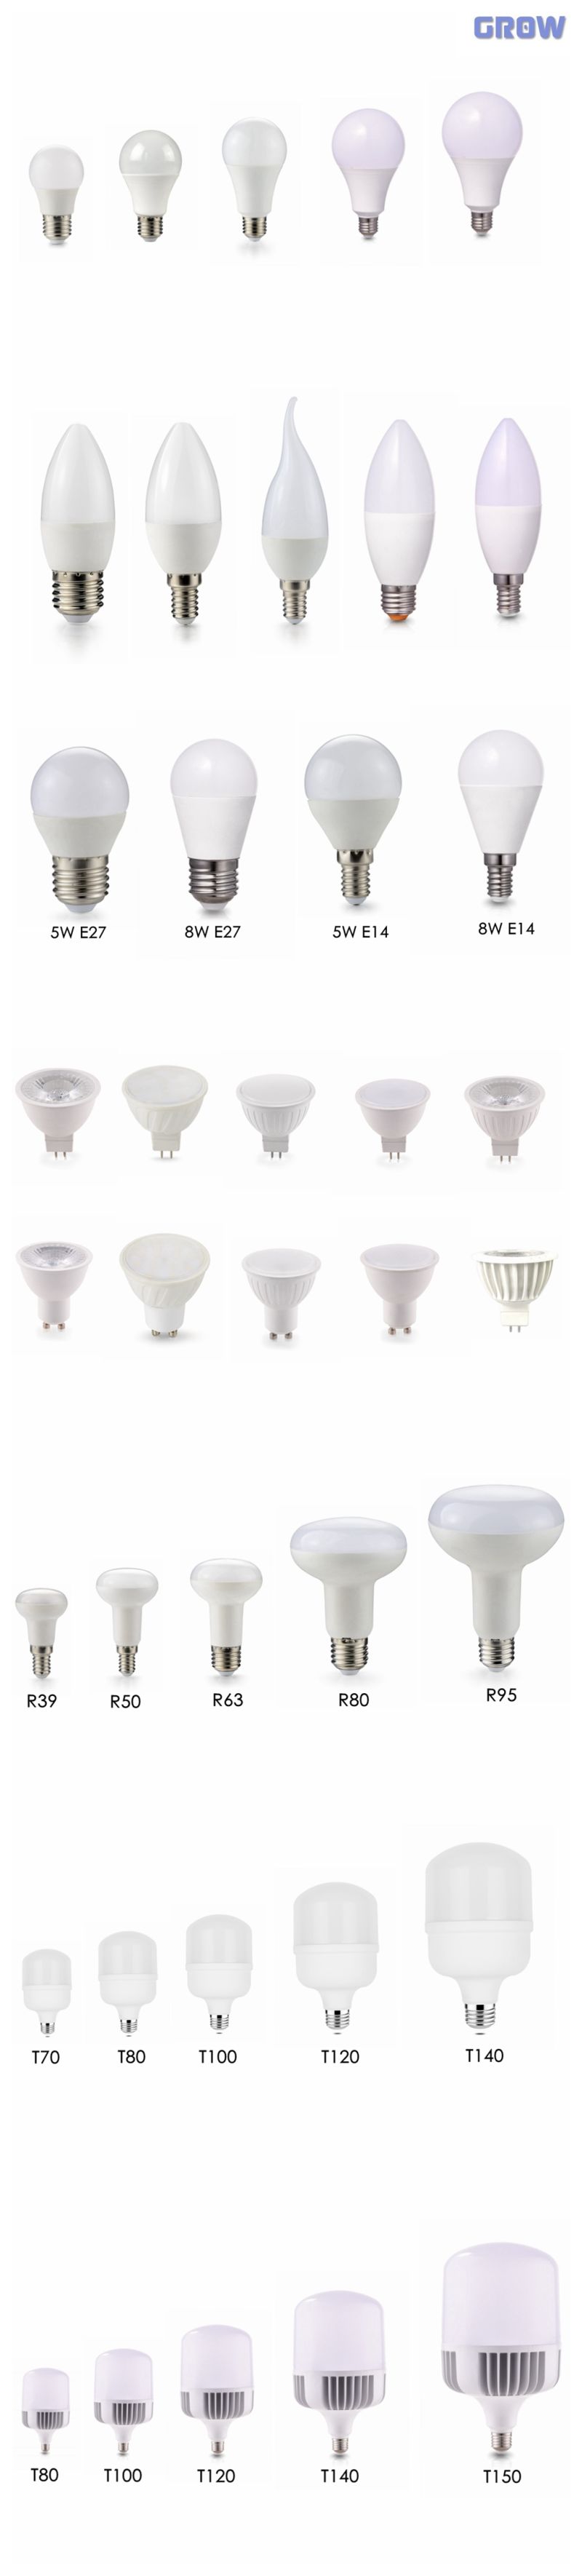 A55 LED Ceramic Glass Bulb E27 LED Lamp (GR854)